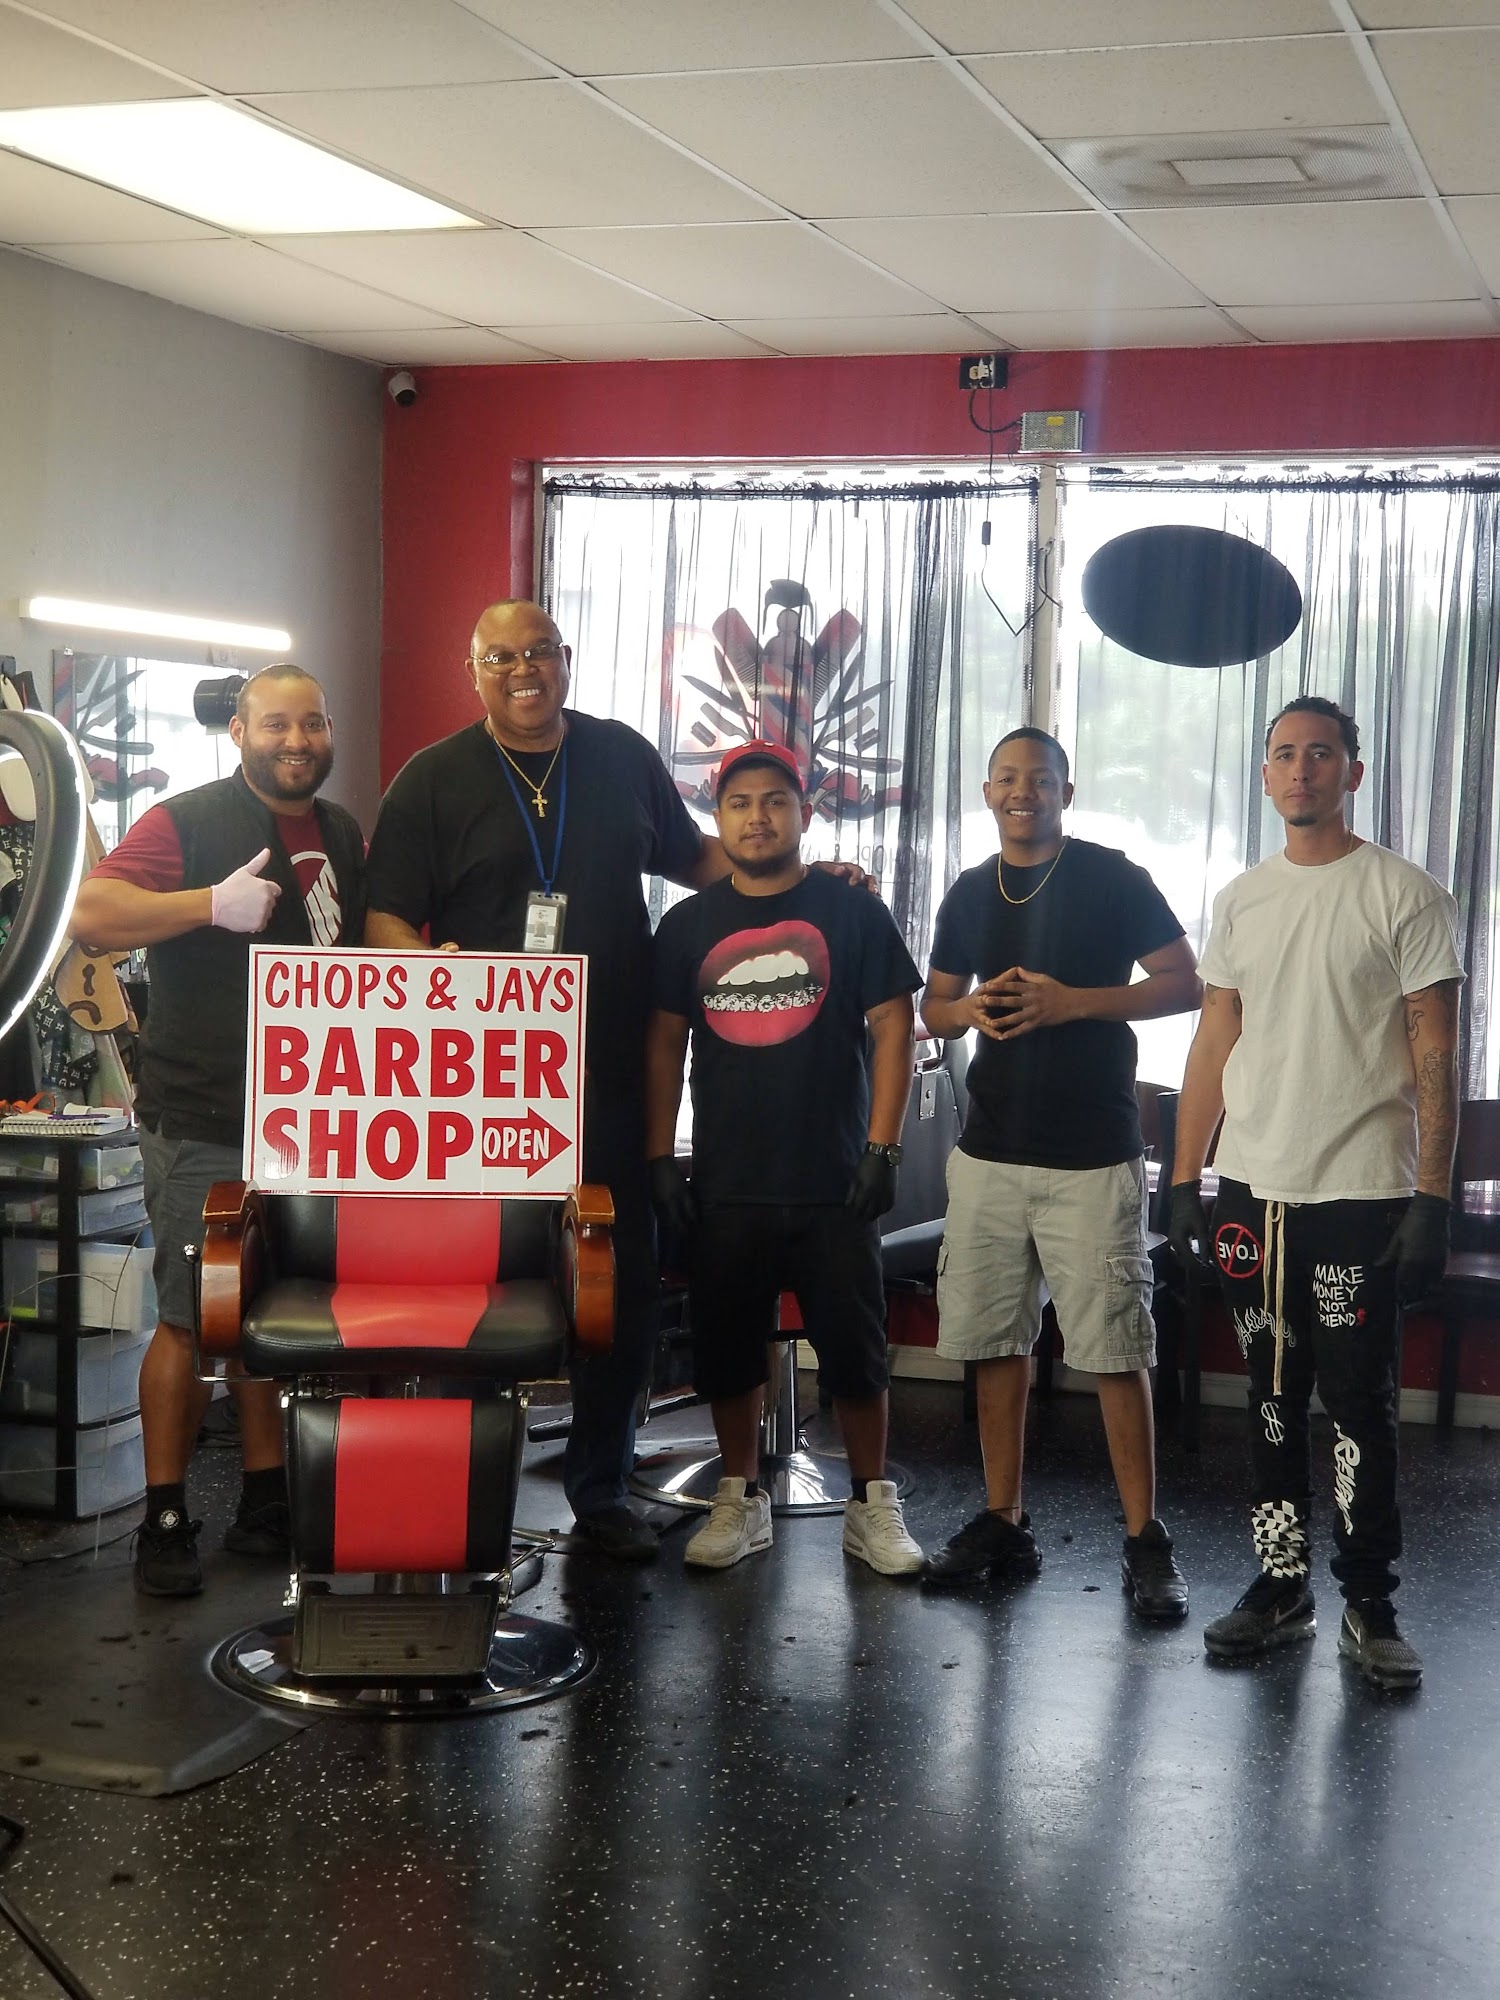 Chops & Jays Barbershop